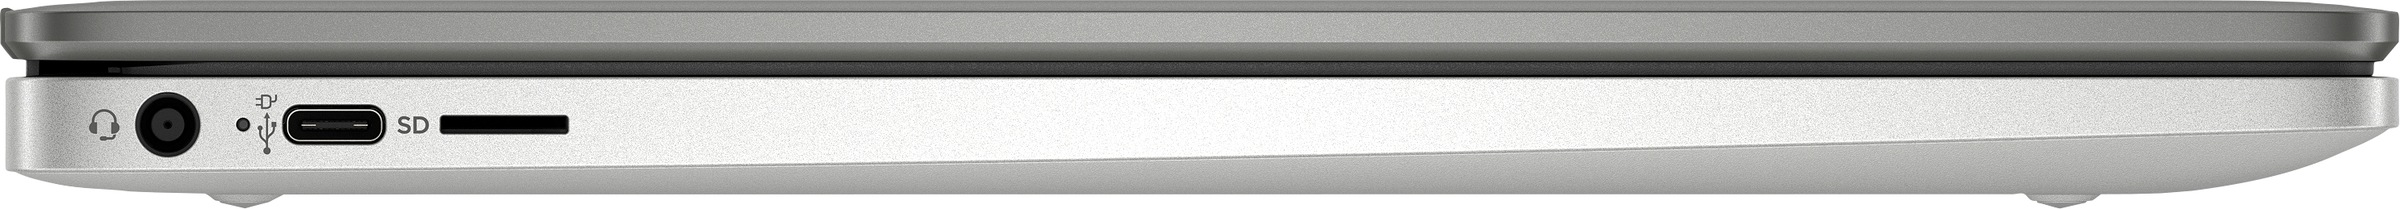 HP Chromebook »14a-na0220ng«, 35,6 cm, / 14 Zoll, Intel, Celeron, UHD Graphics 600